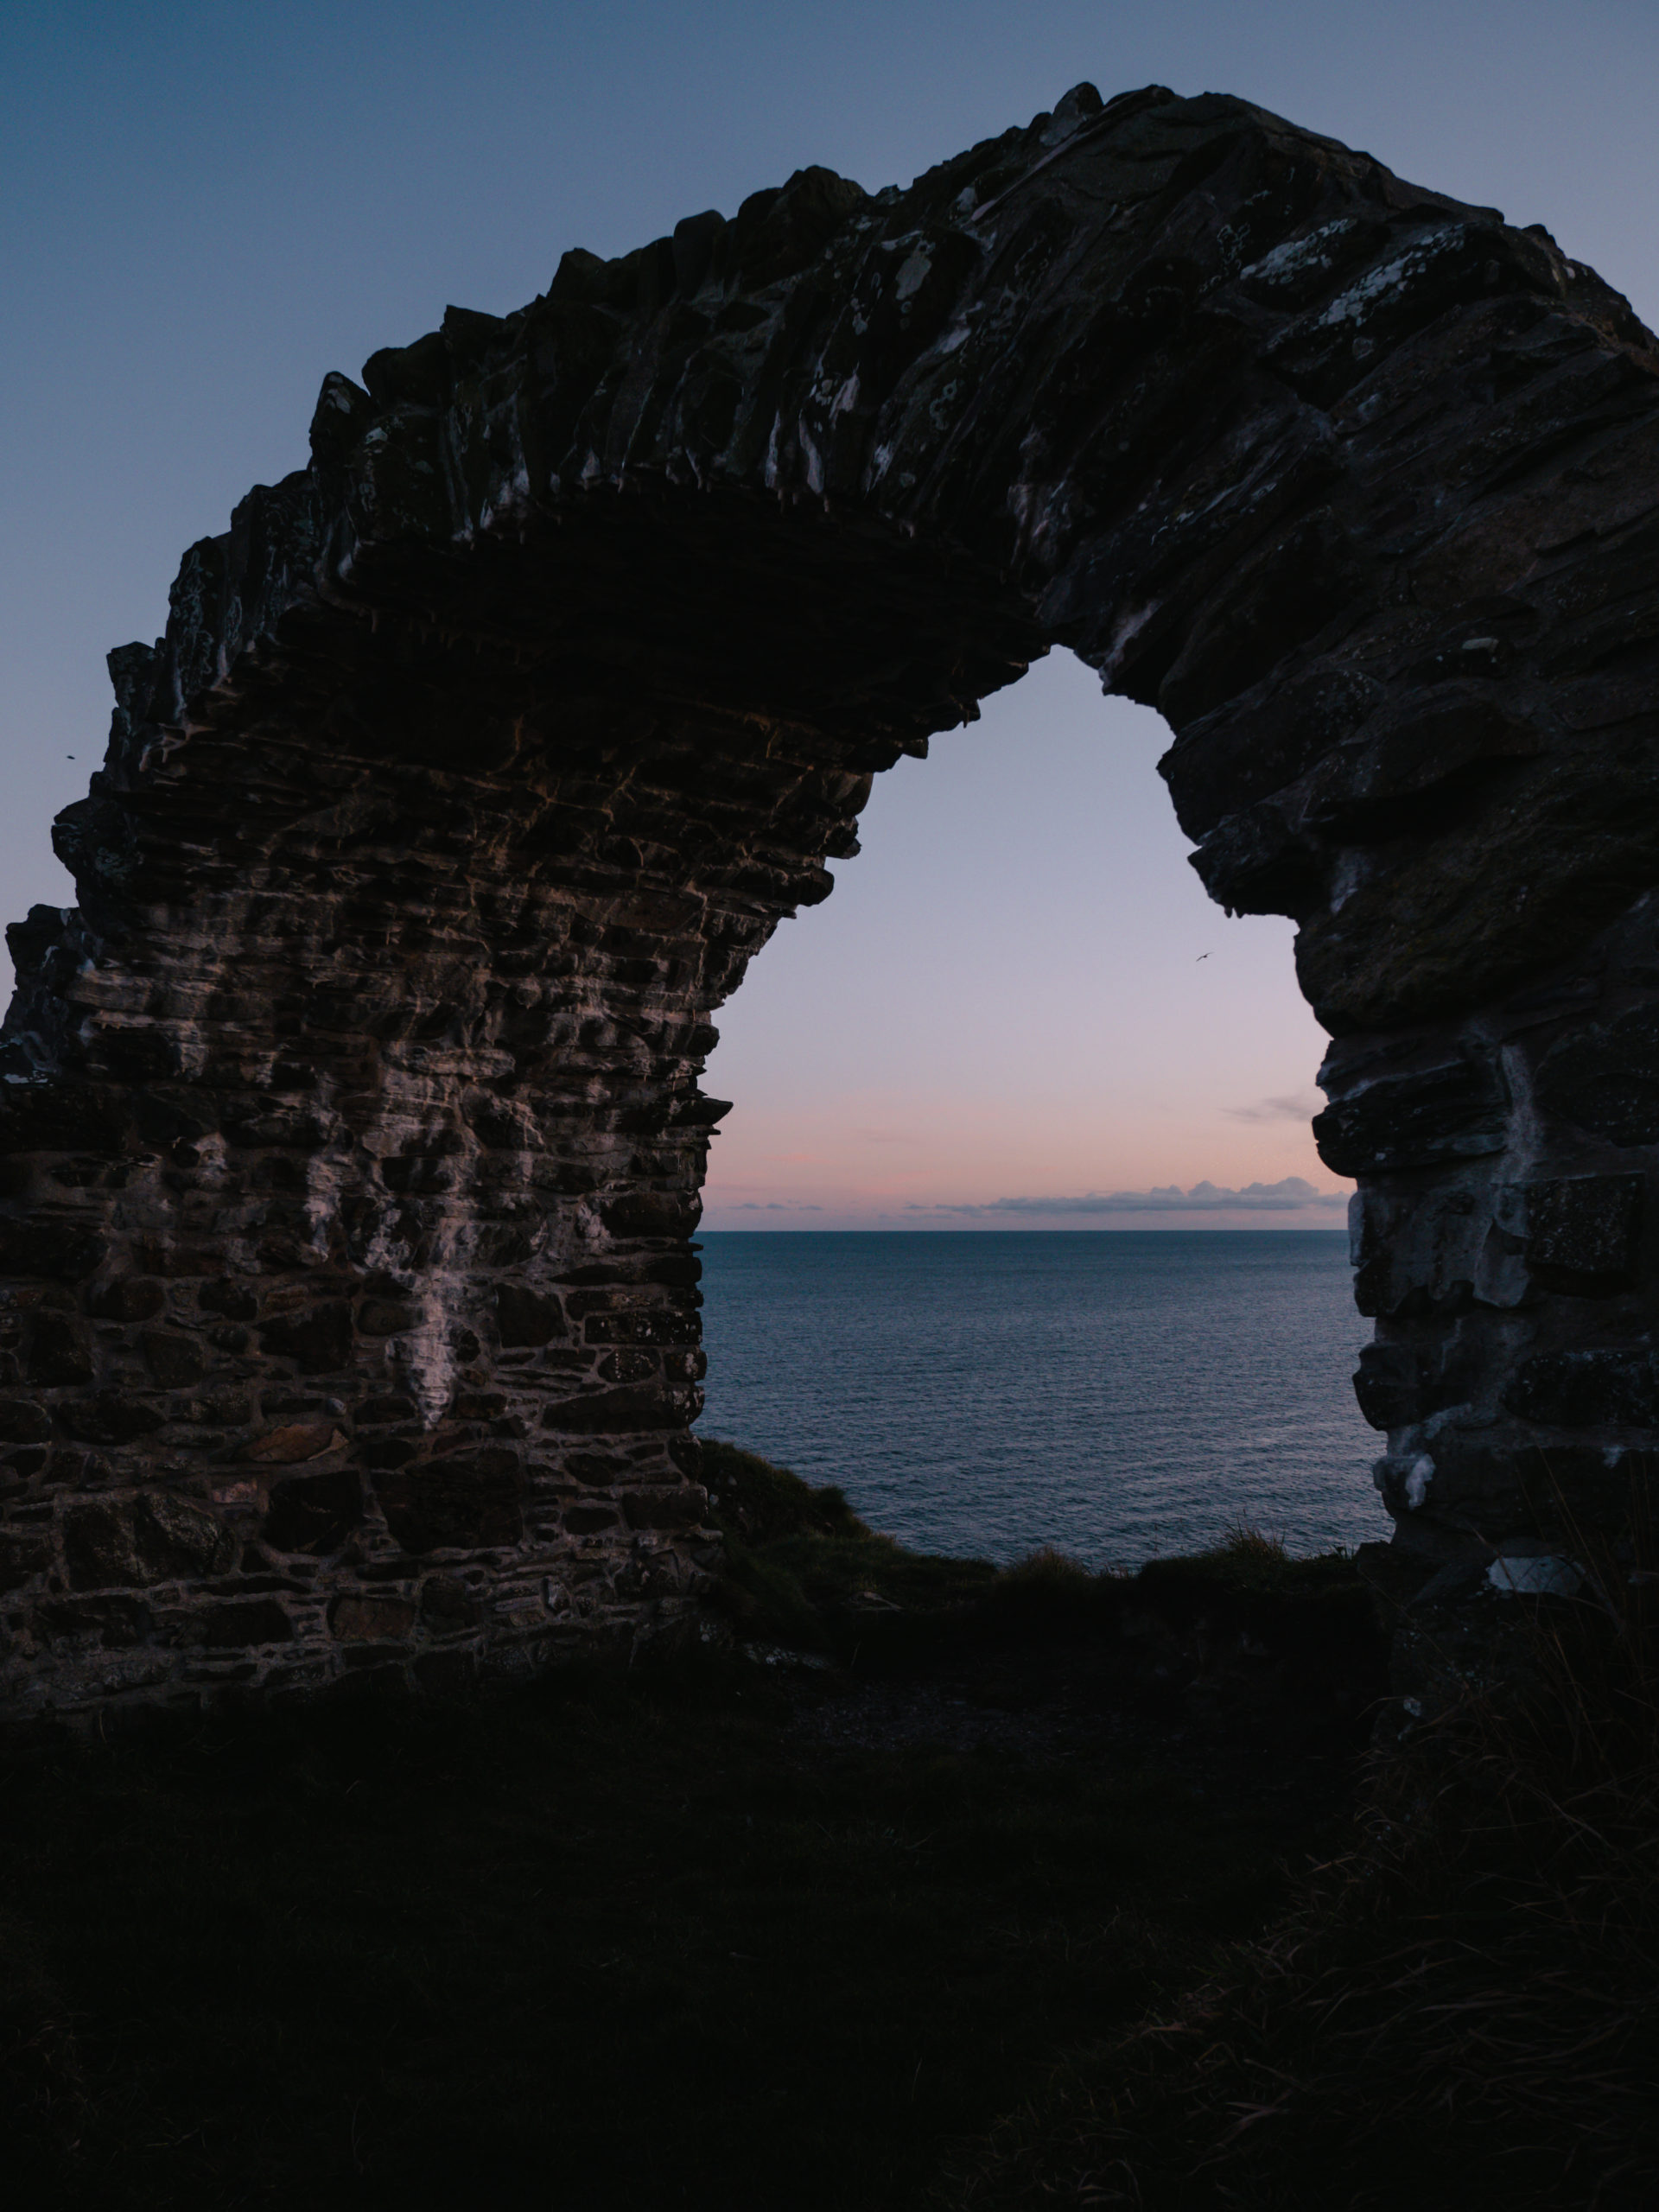 cruggleton castle scotland écosse promenage coucher de soleil mer